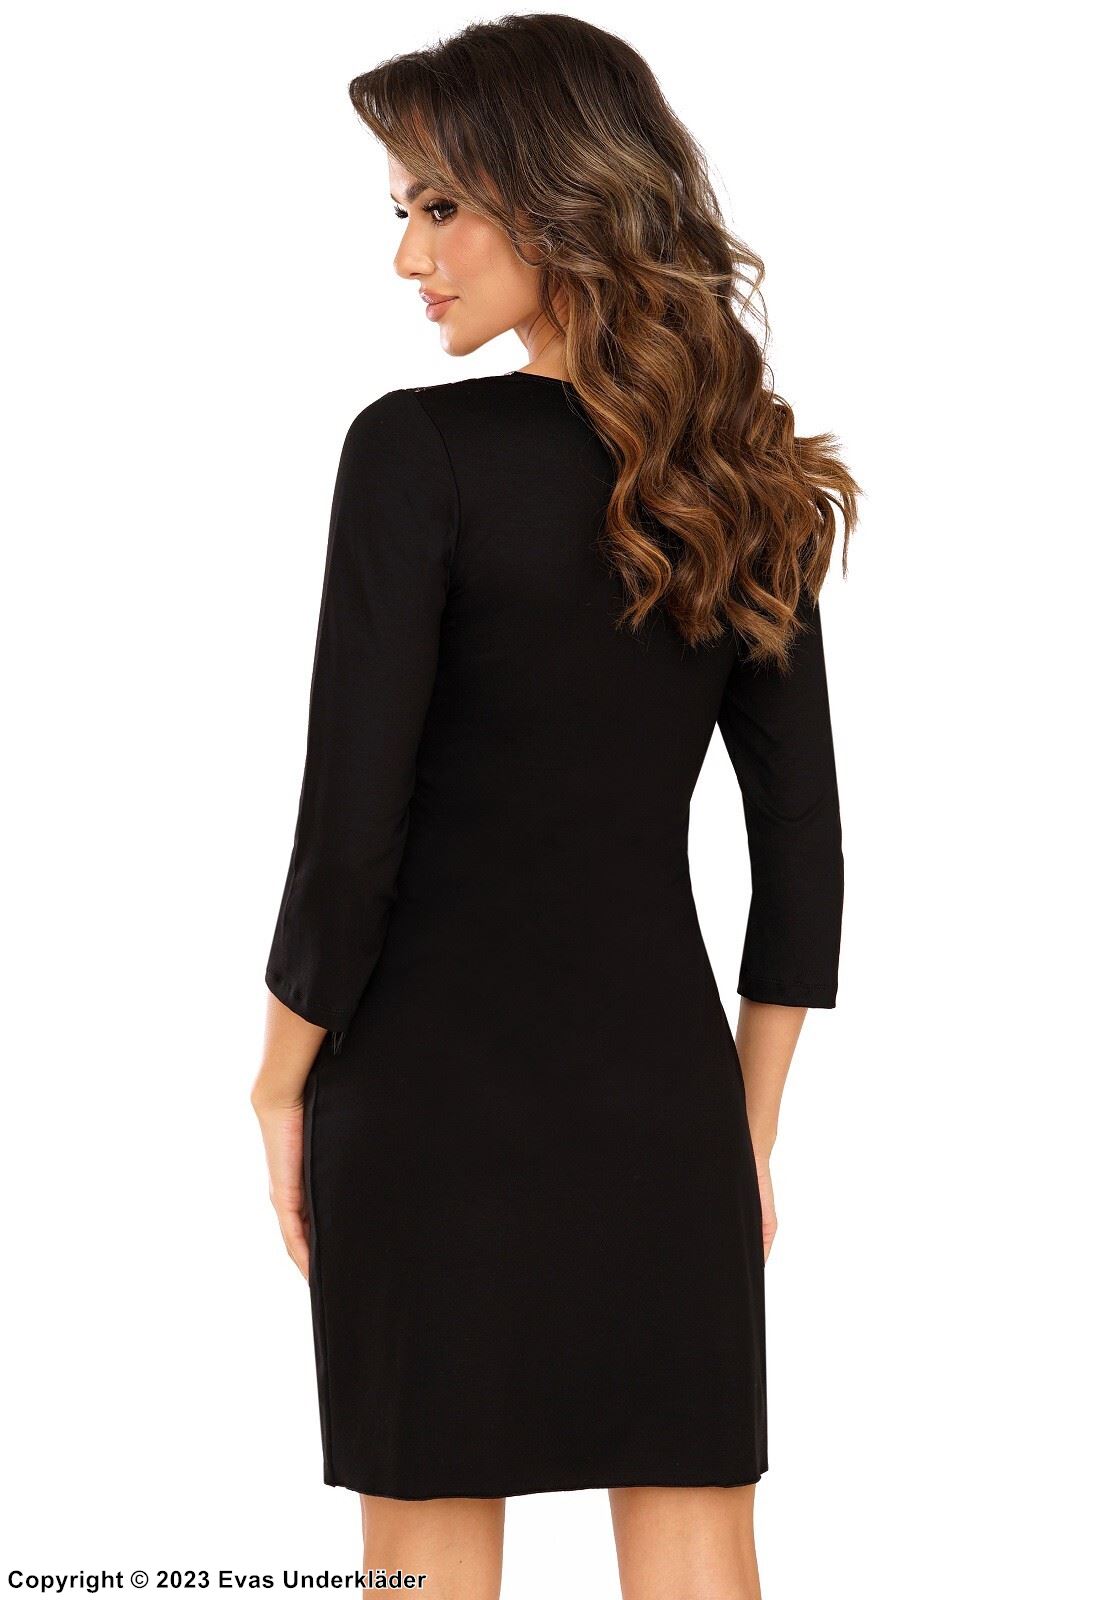 Elegant nightdress, high quality viscose, lace overlay, 3/4 length sleeves